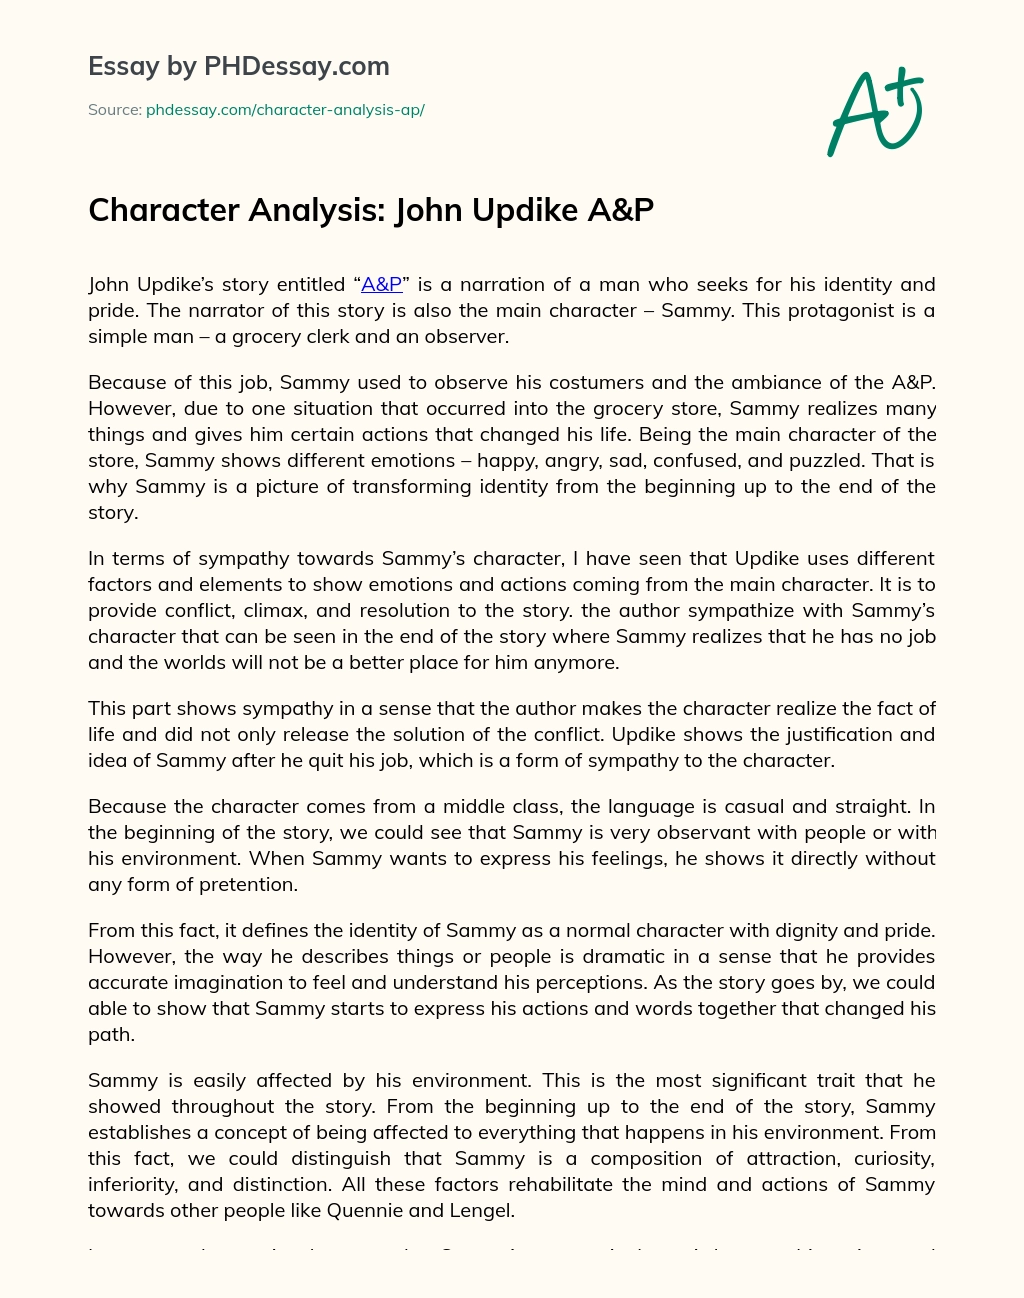 Character Analysis: John Updike A&P essay